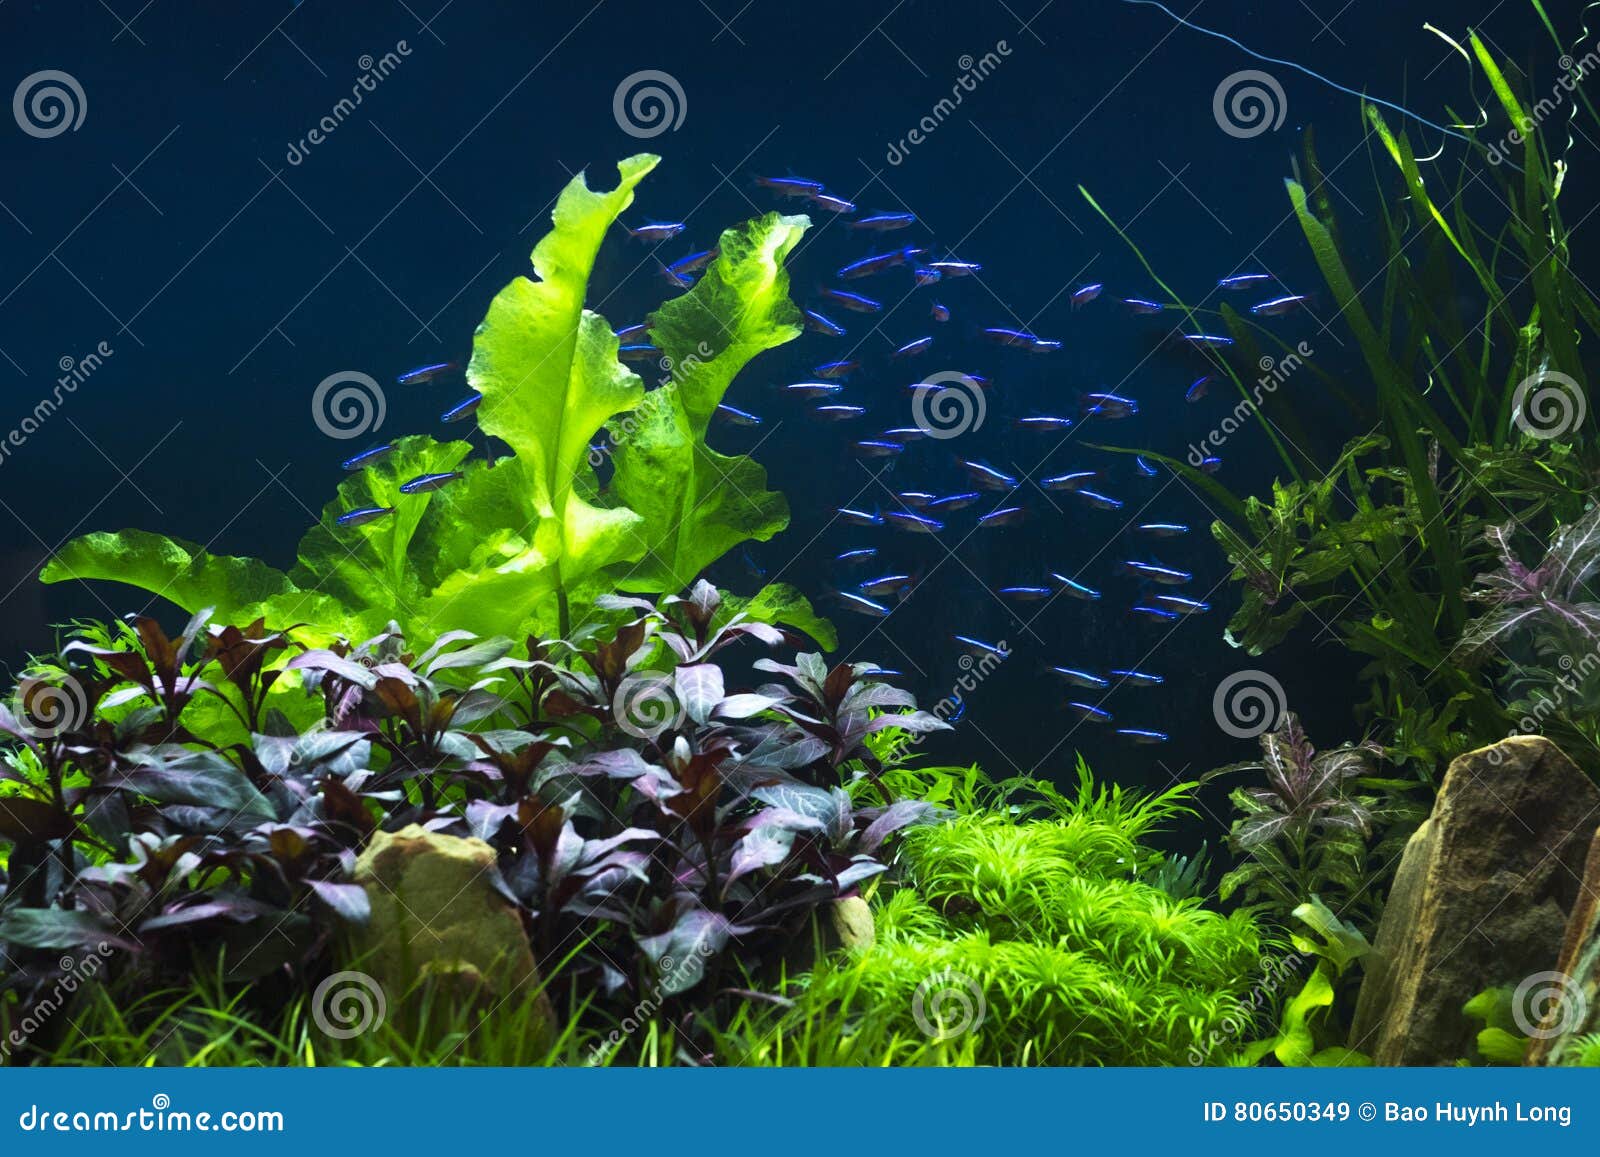 https://thumbs.dreamstime.com/z/small-aquarium-tank-colorful-fishes-80650349.jpg